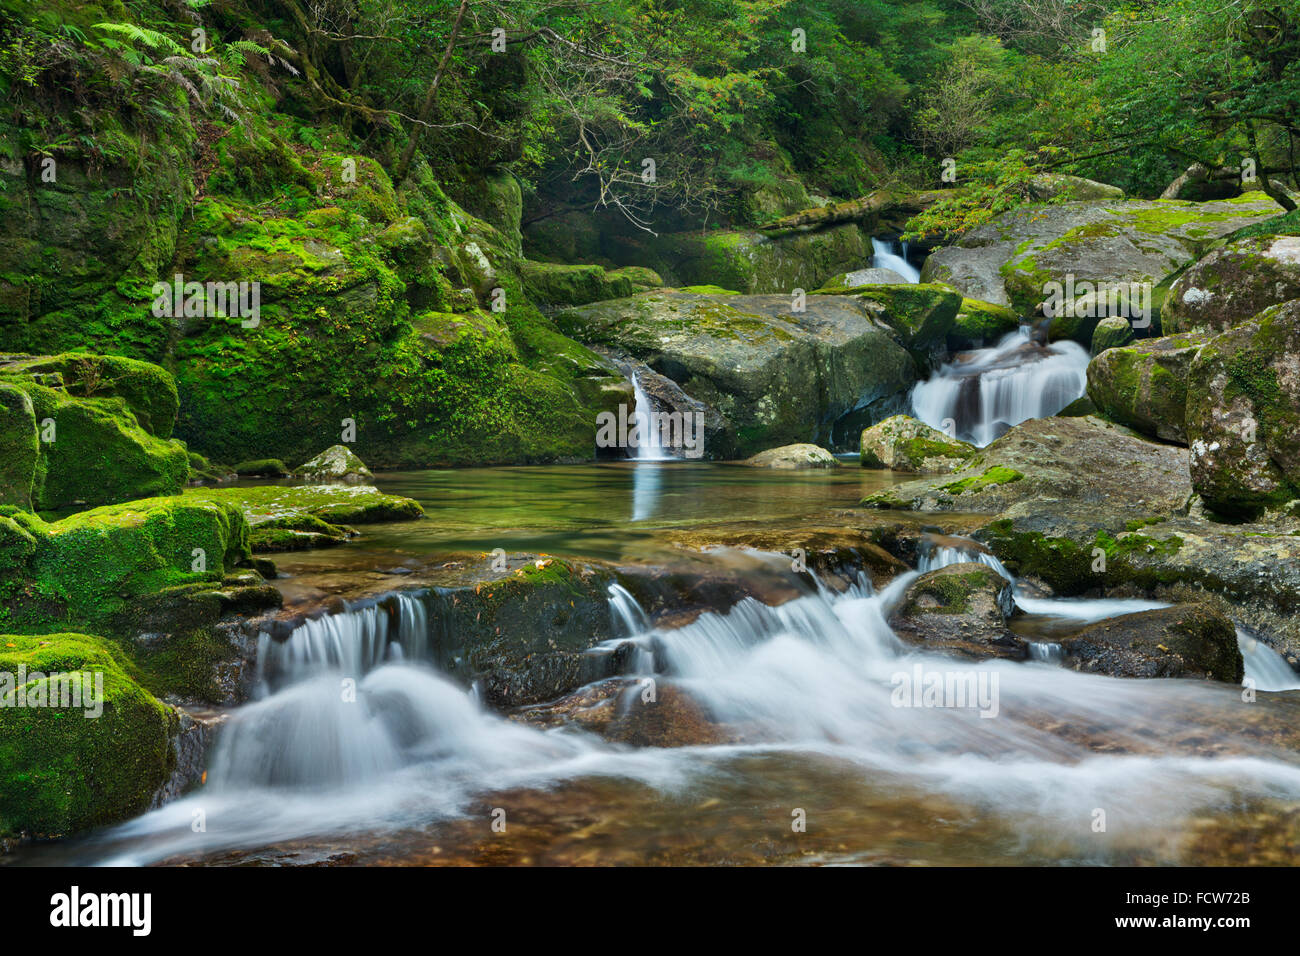 A river through lush rainforest on the southern island of Yakushima (屋久島), Japan. Stock Photo